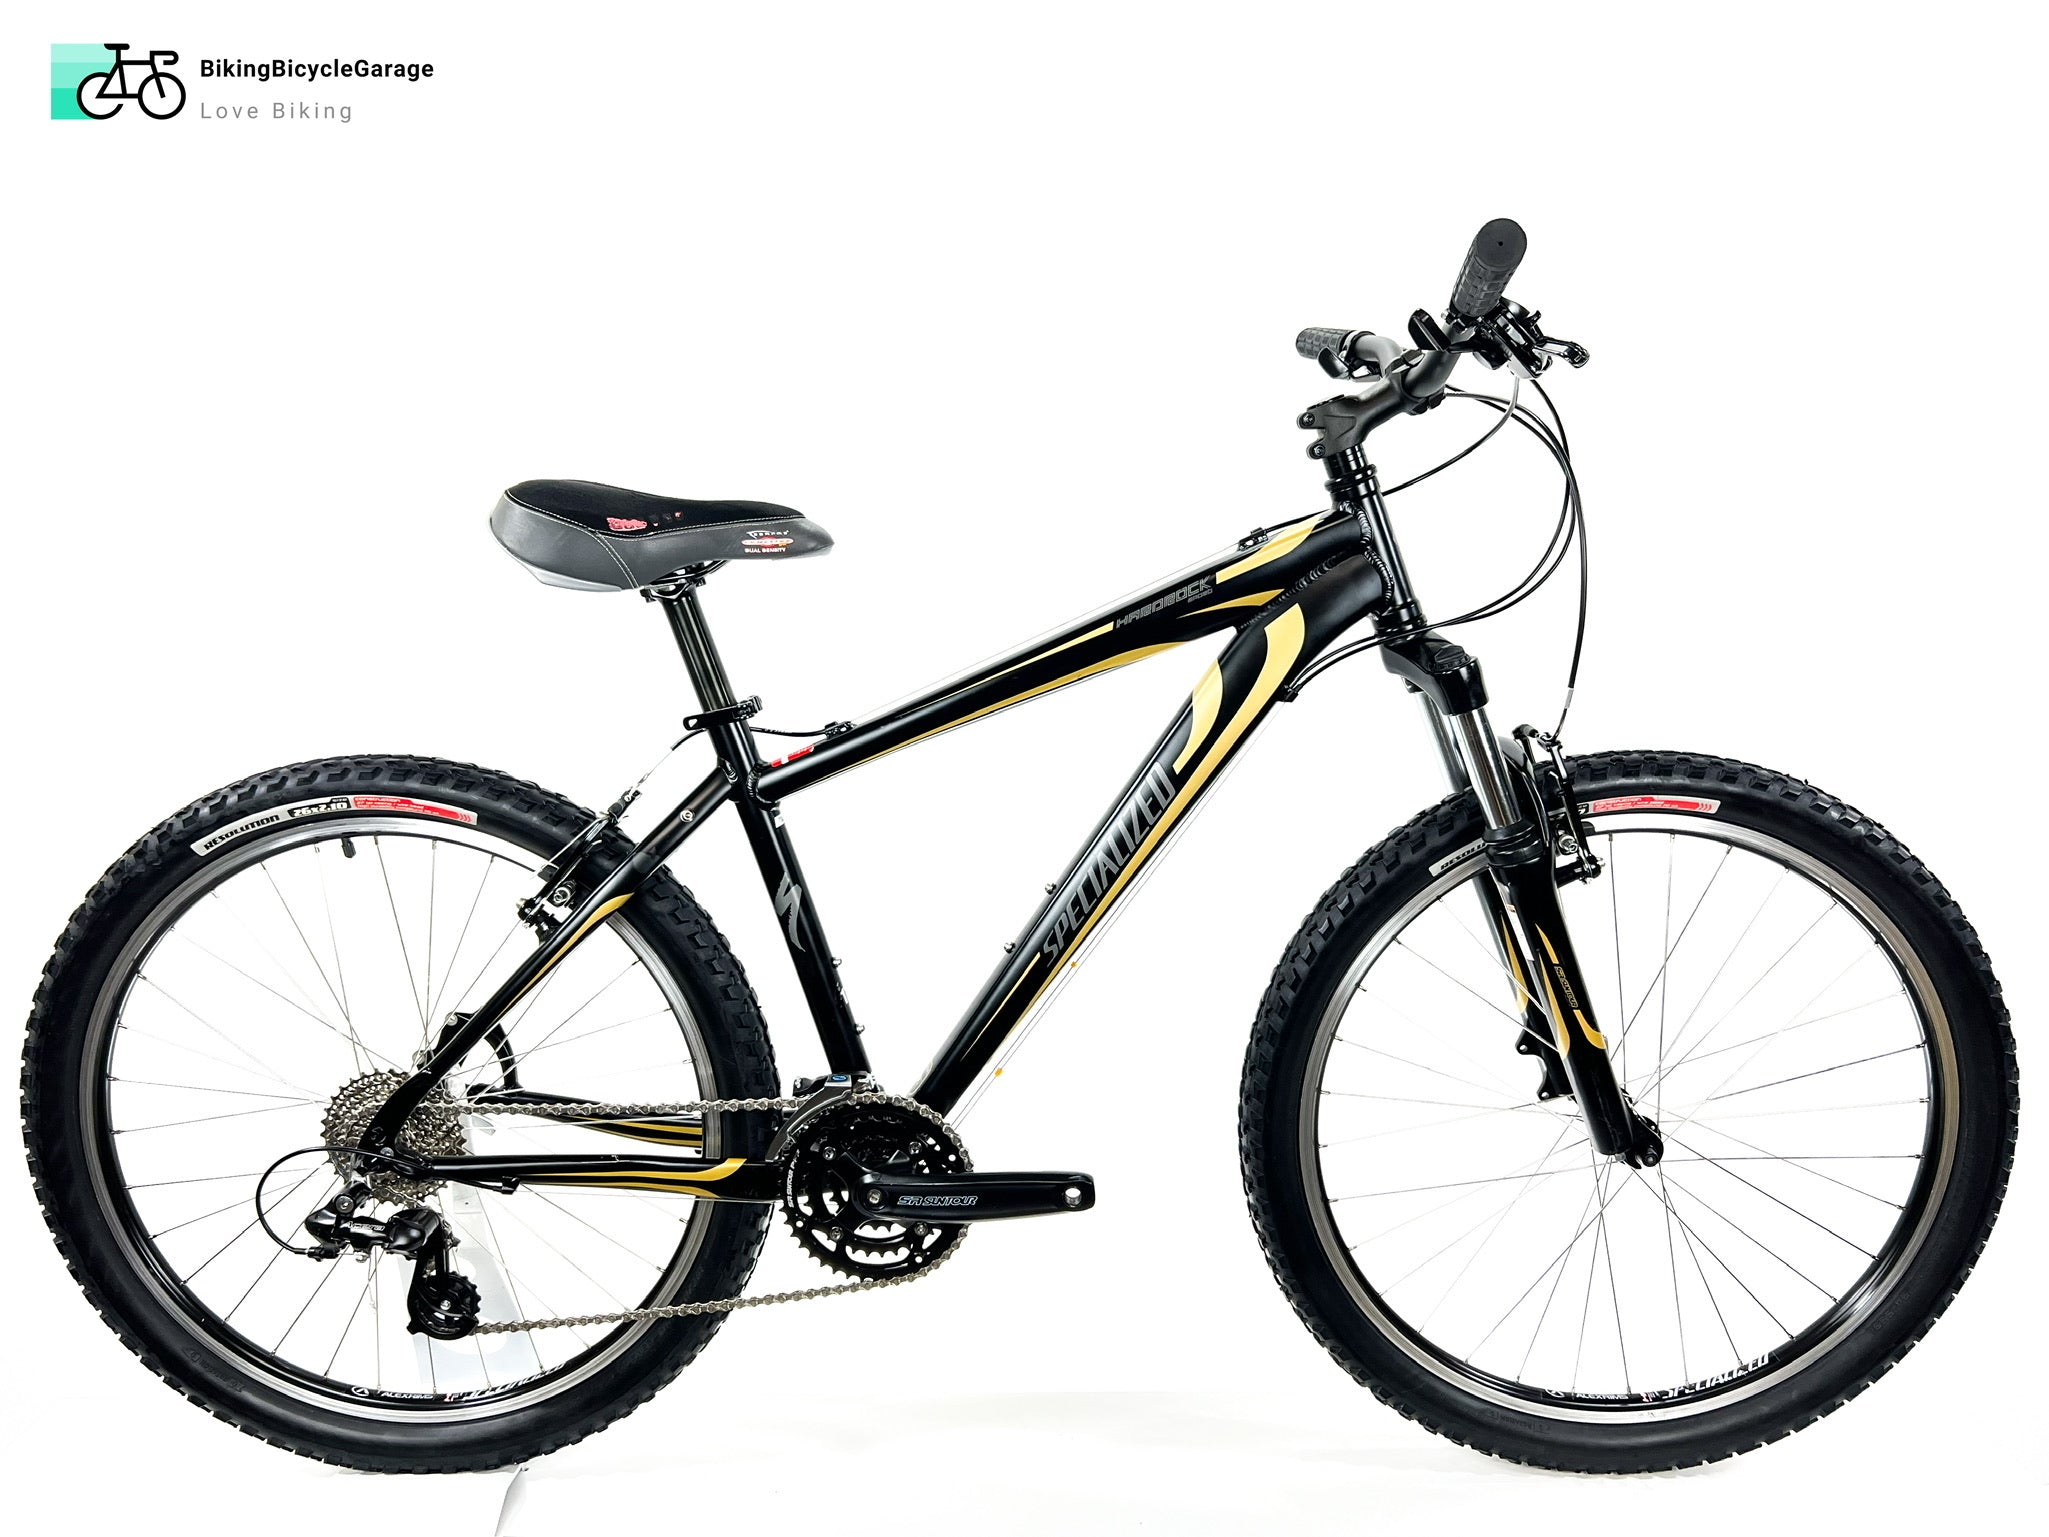 Specialized HardRock Sport, Mountain Bike, Size: Medium (17”)